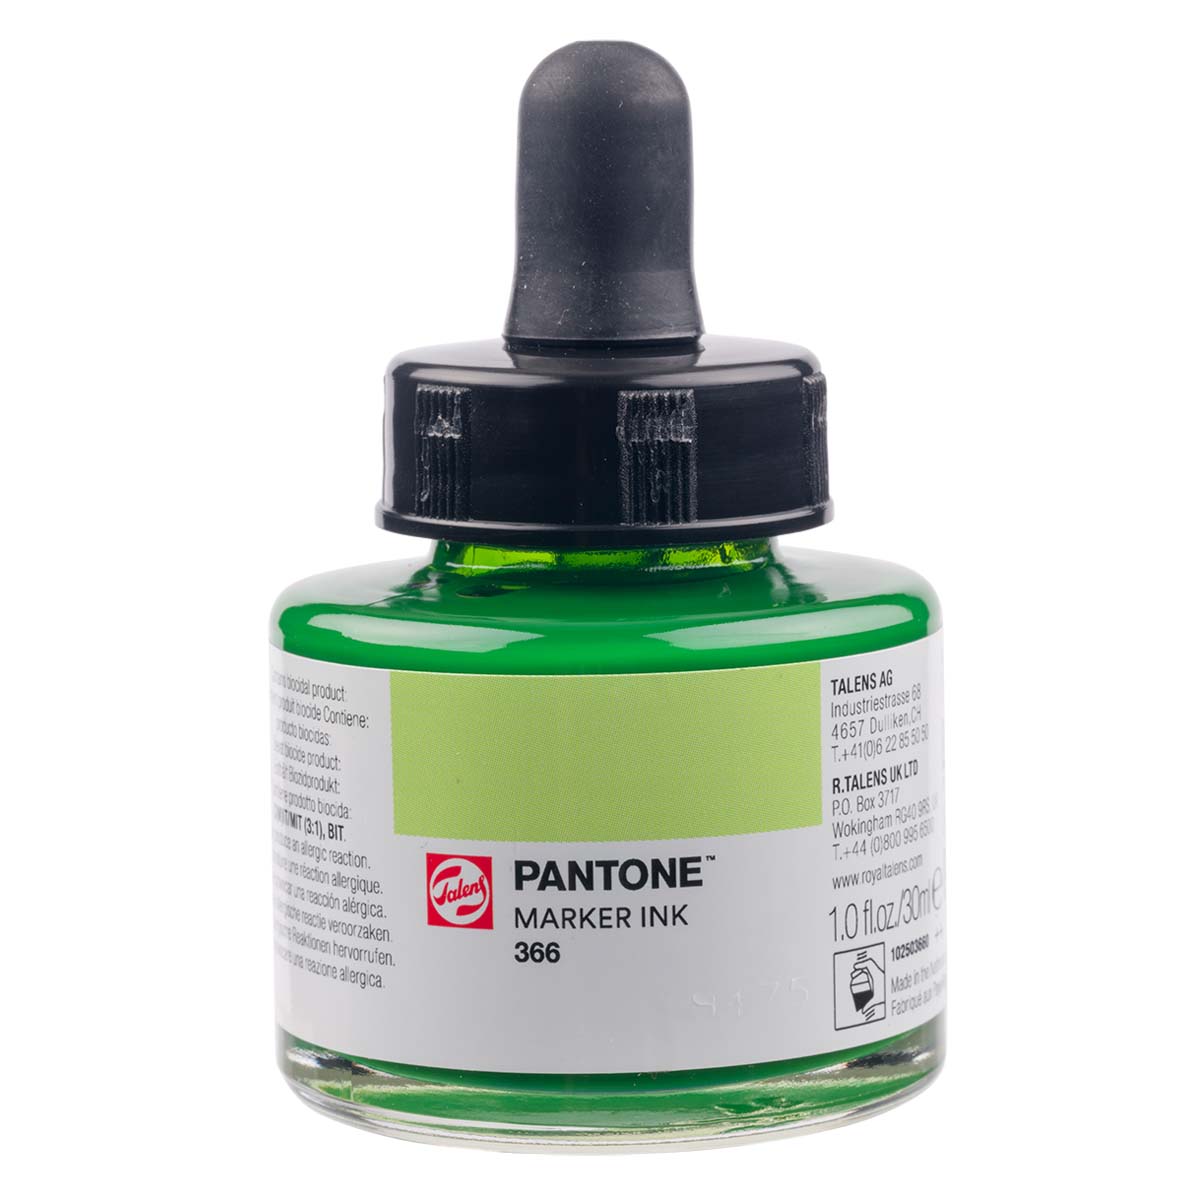 Jacquard Pinata Alcohol Ink - Lime Green, 1/2oz